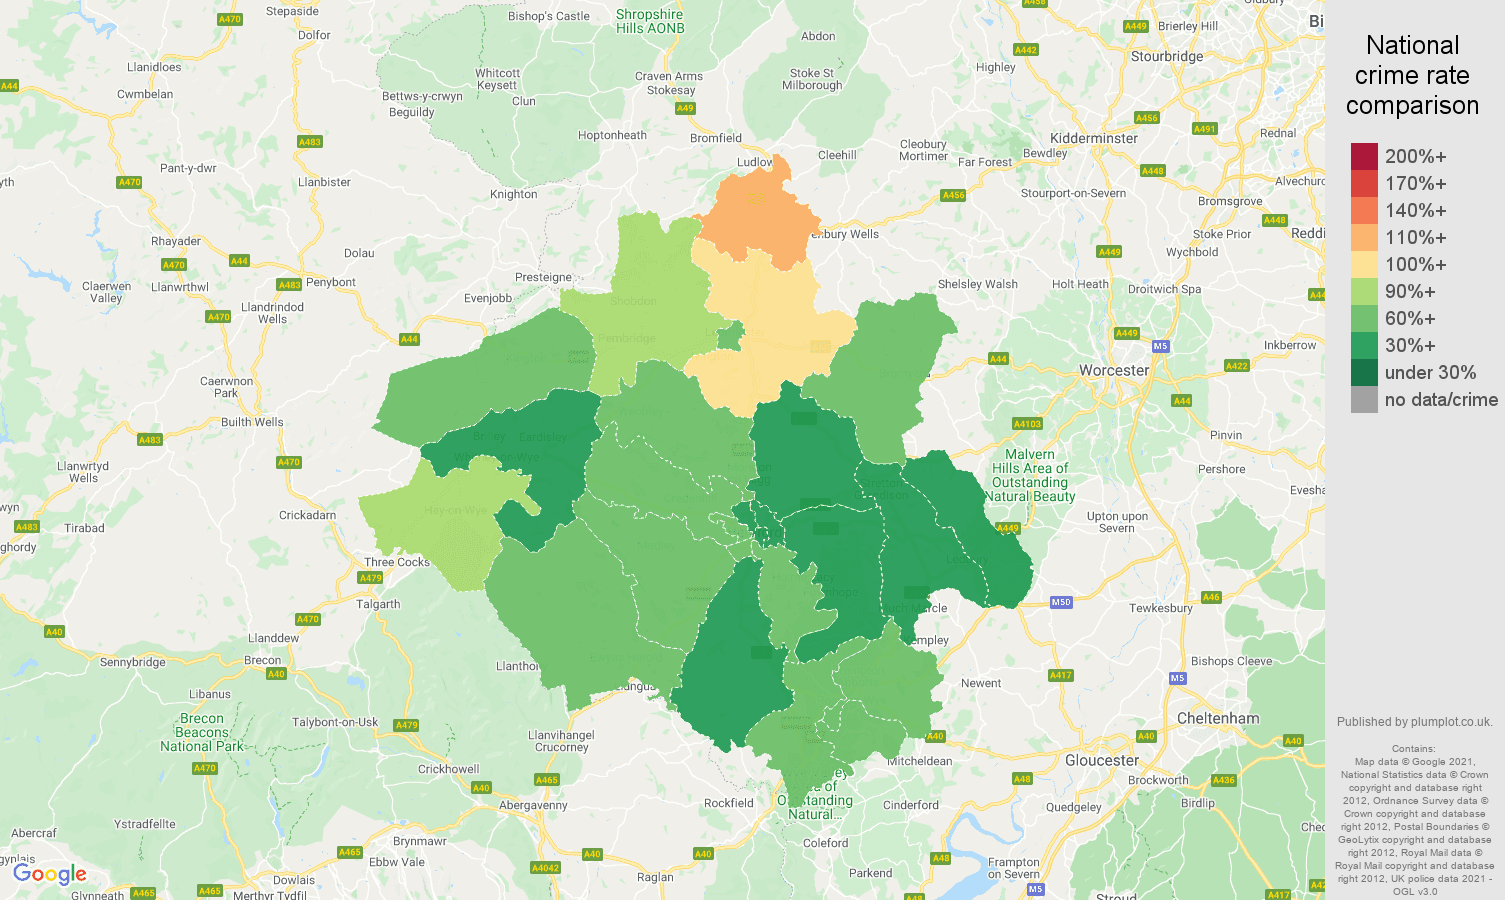 Herefordshire burglary crime rate comparison map